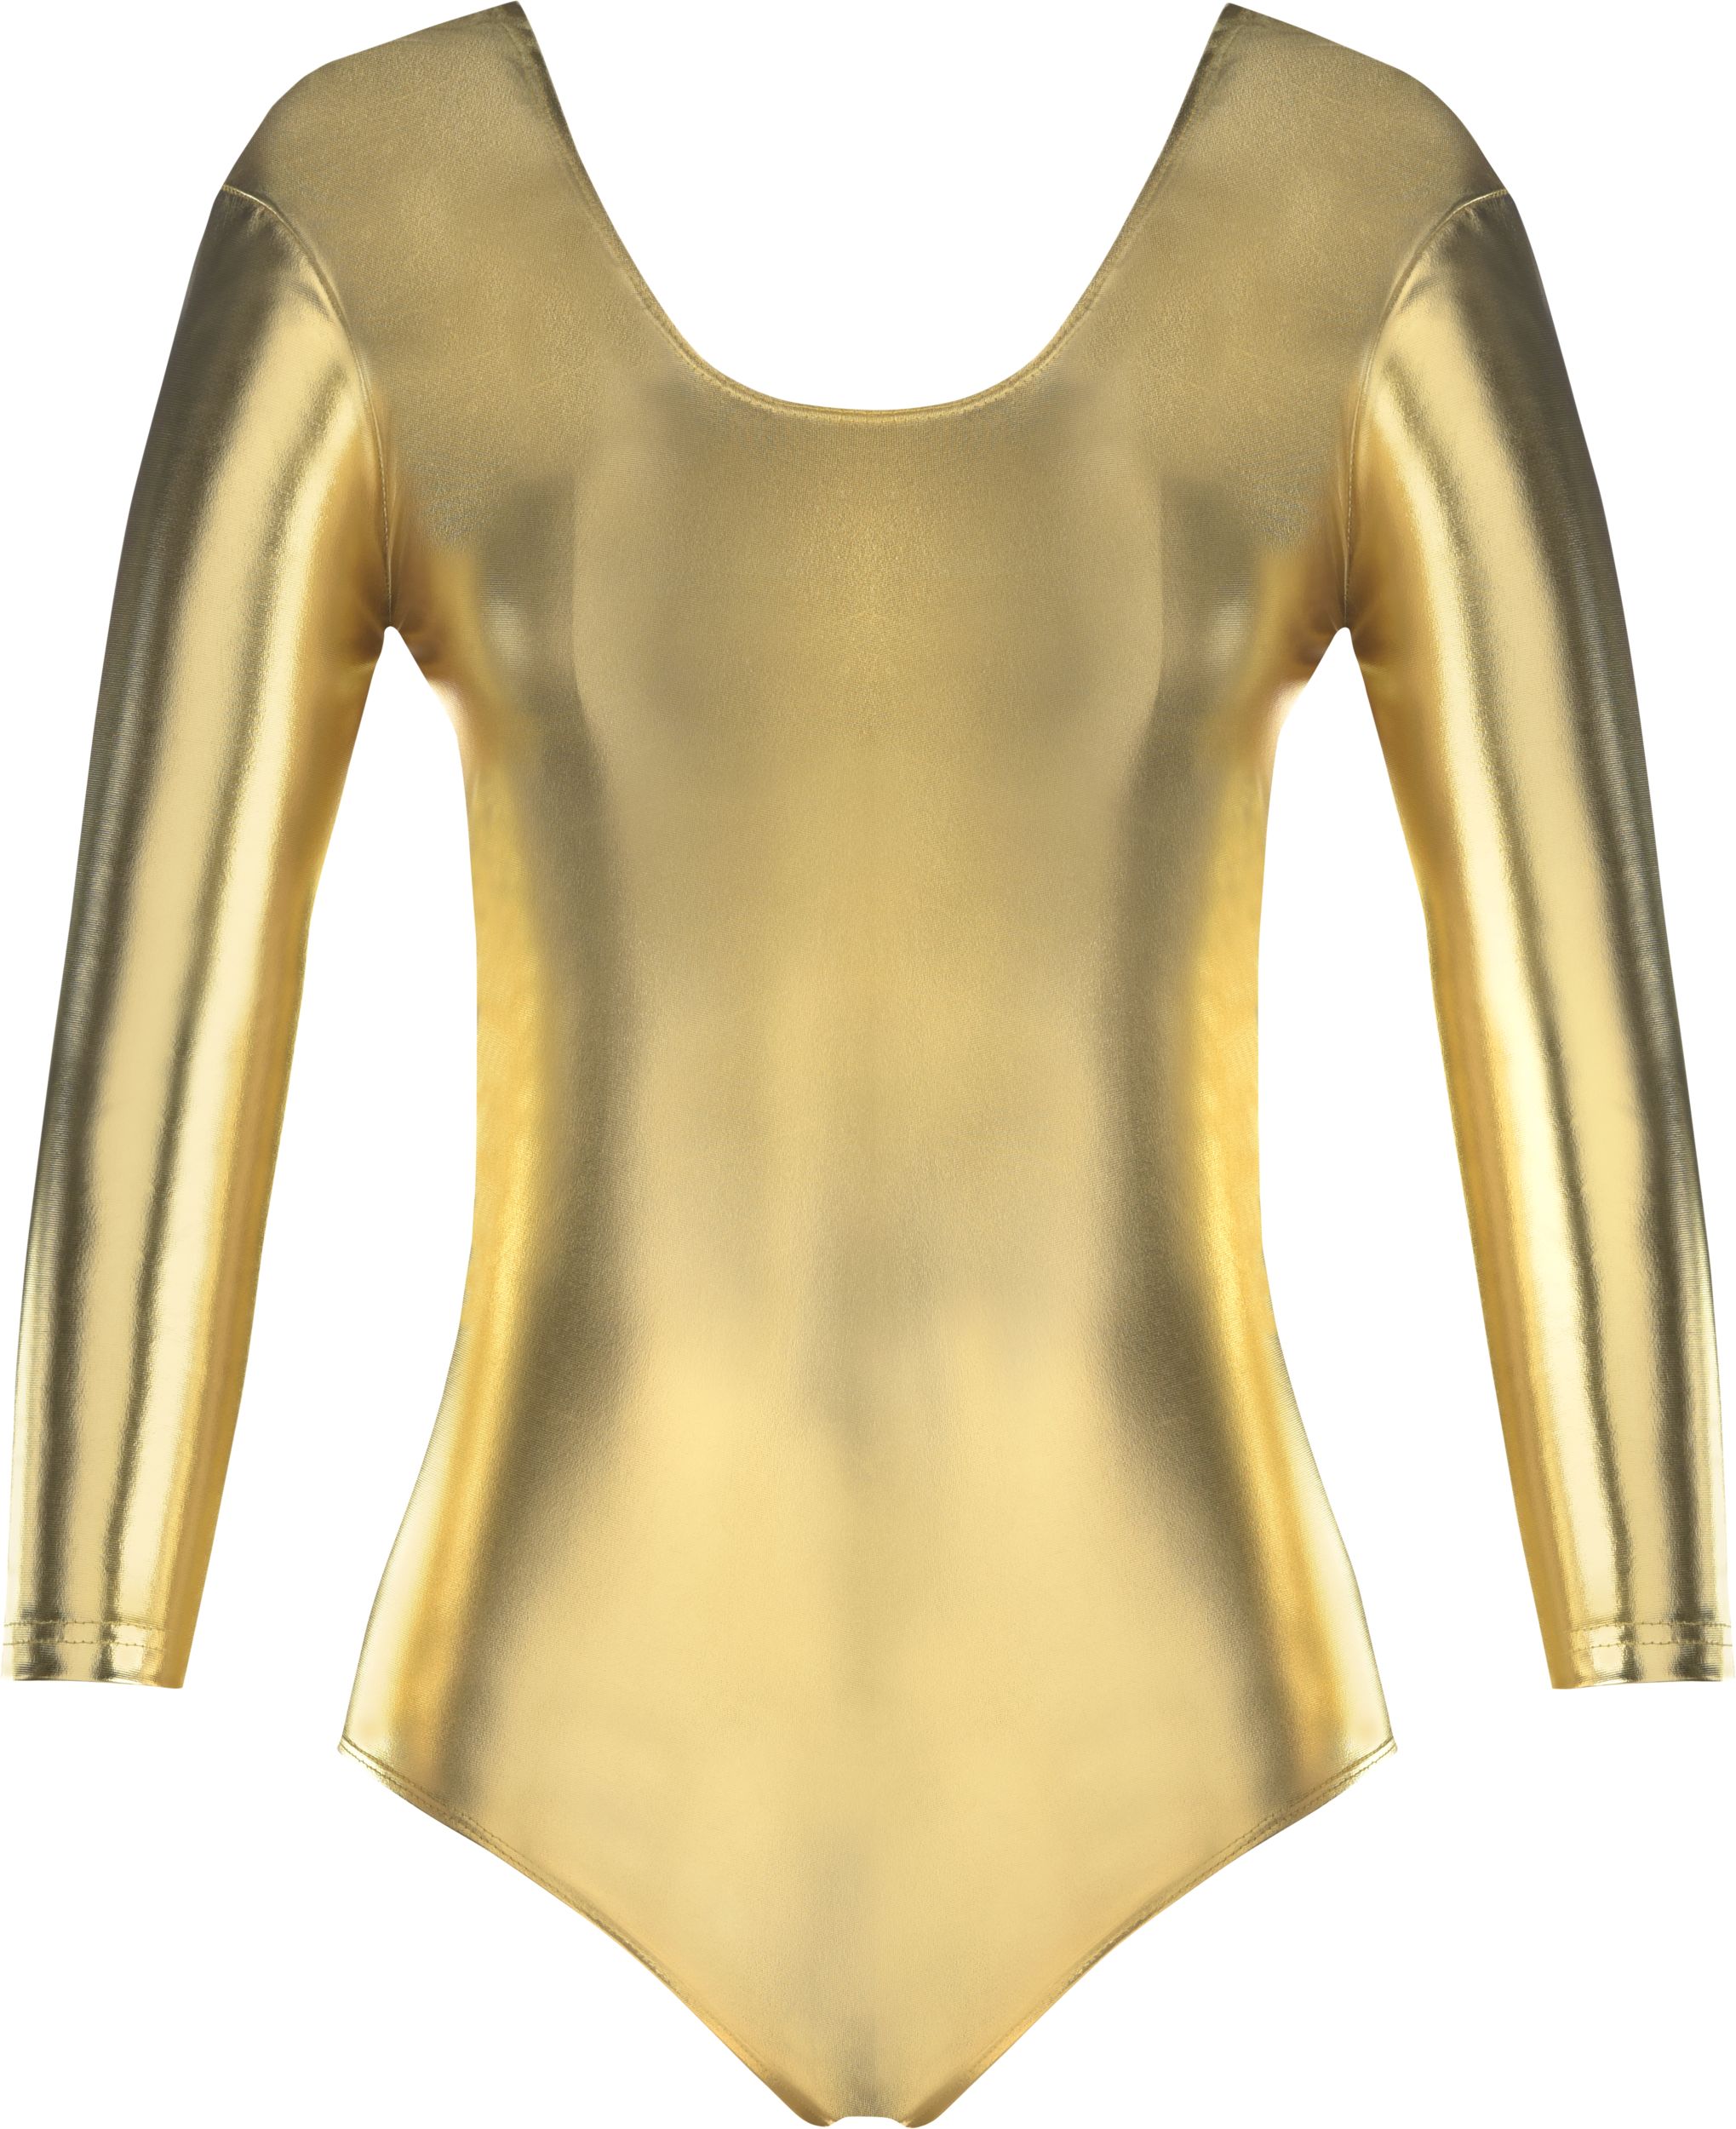 Women's Gold Bodysuit